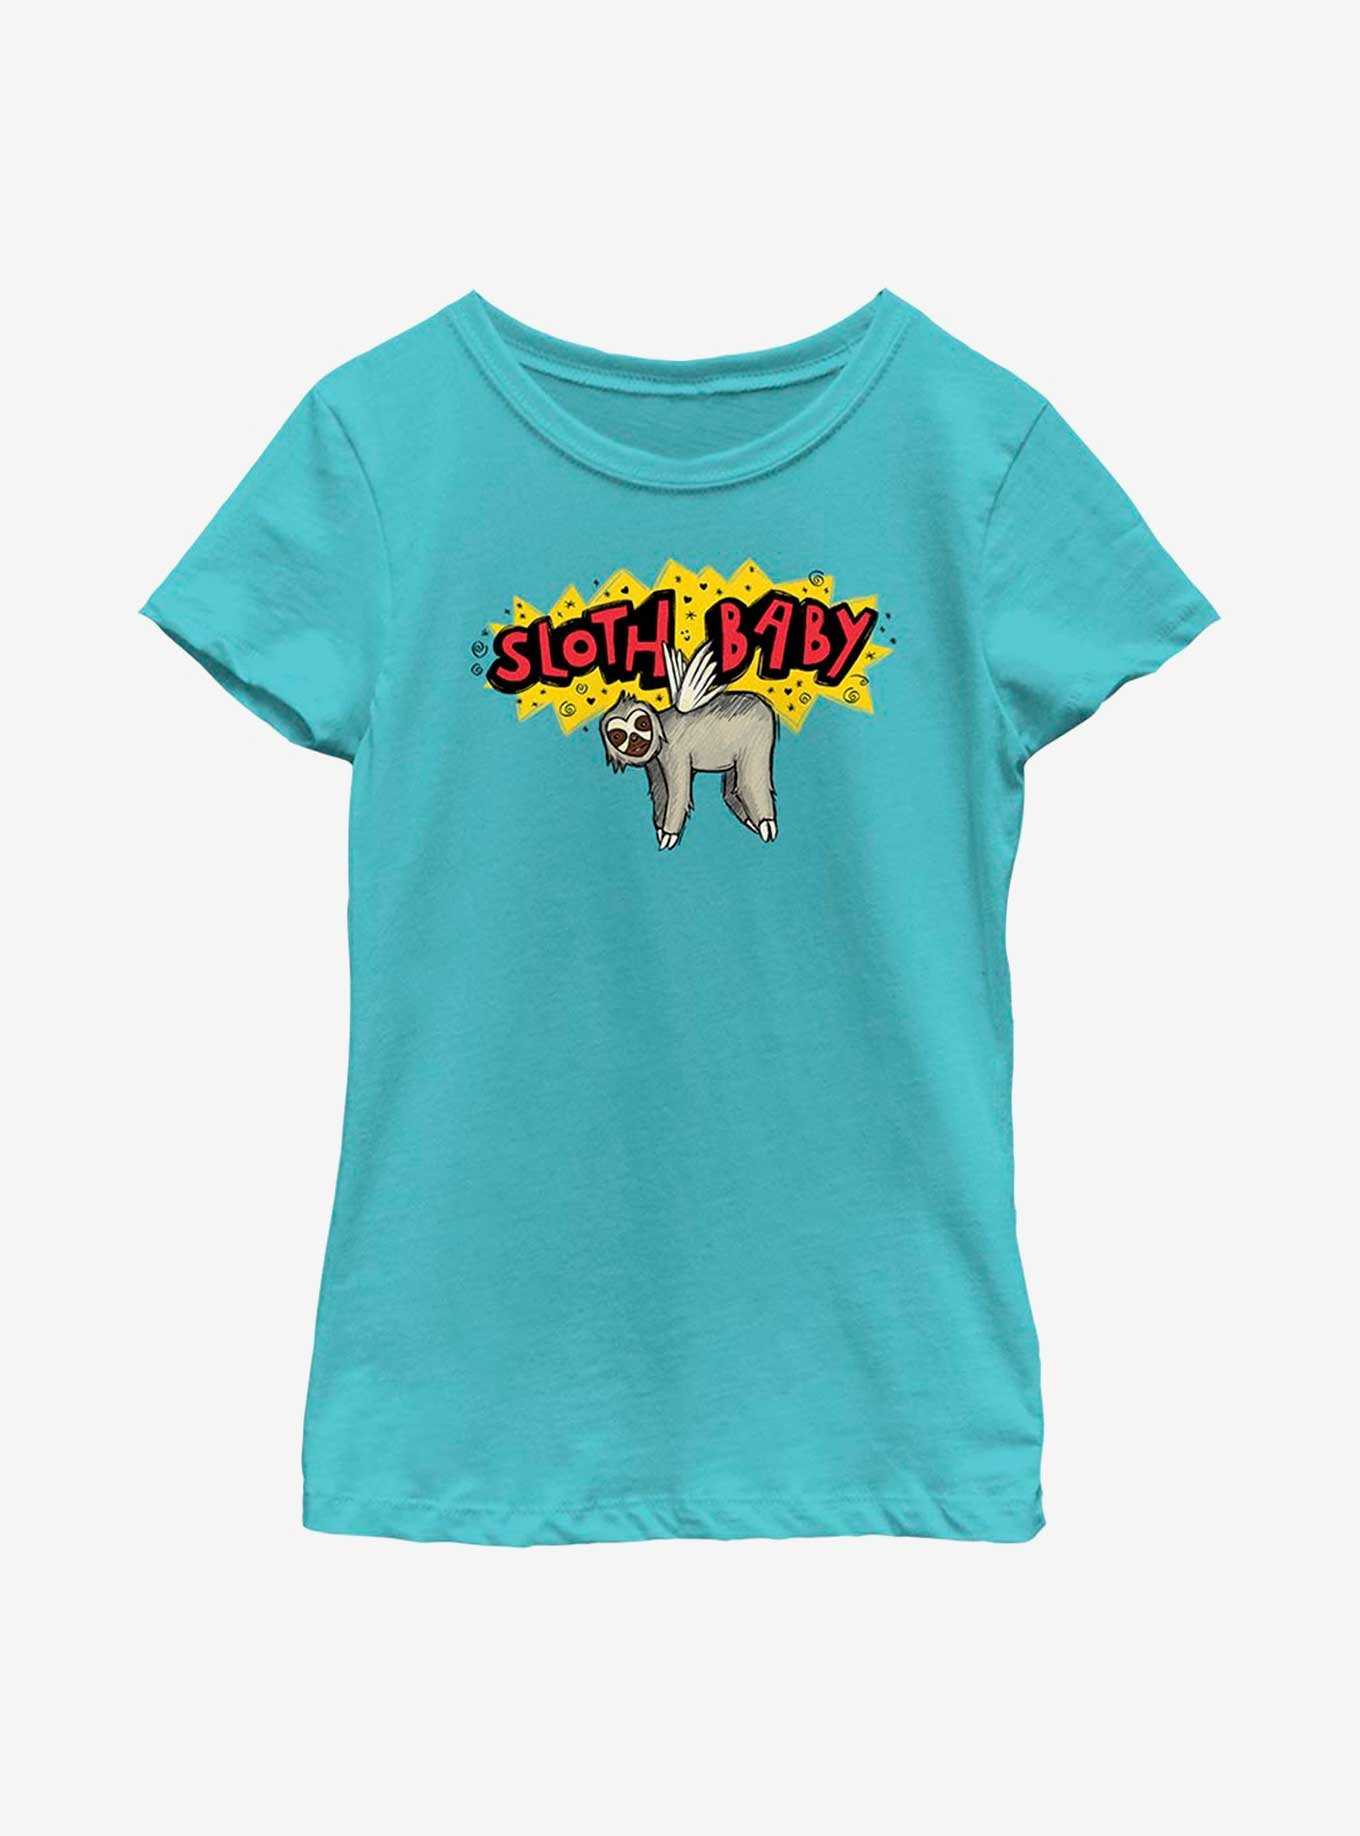 Marvel Ms. Marvel Sloth Baby Youth Girls T-Shirt, , hi-res